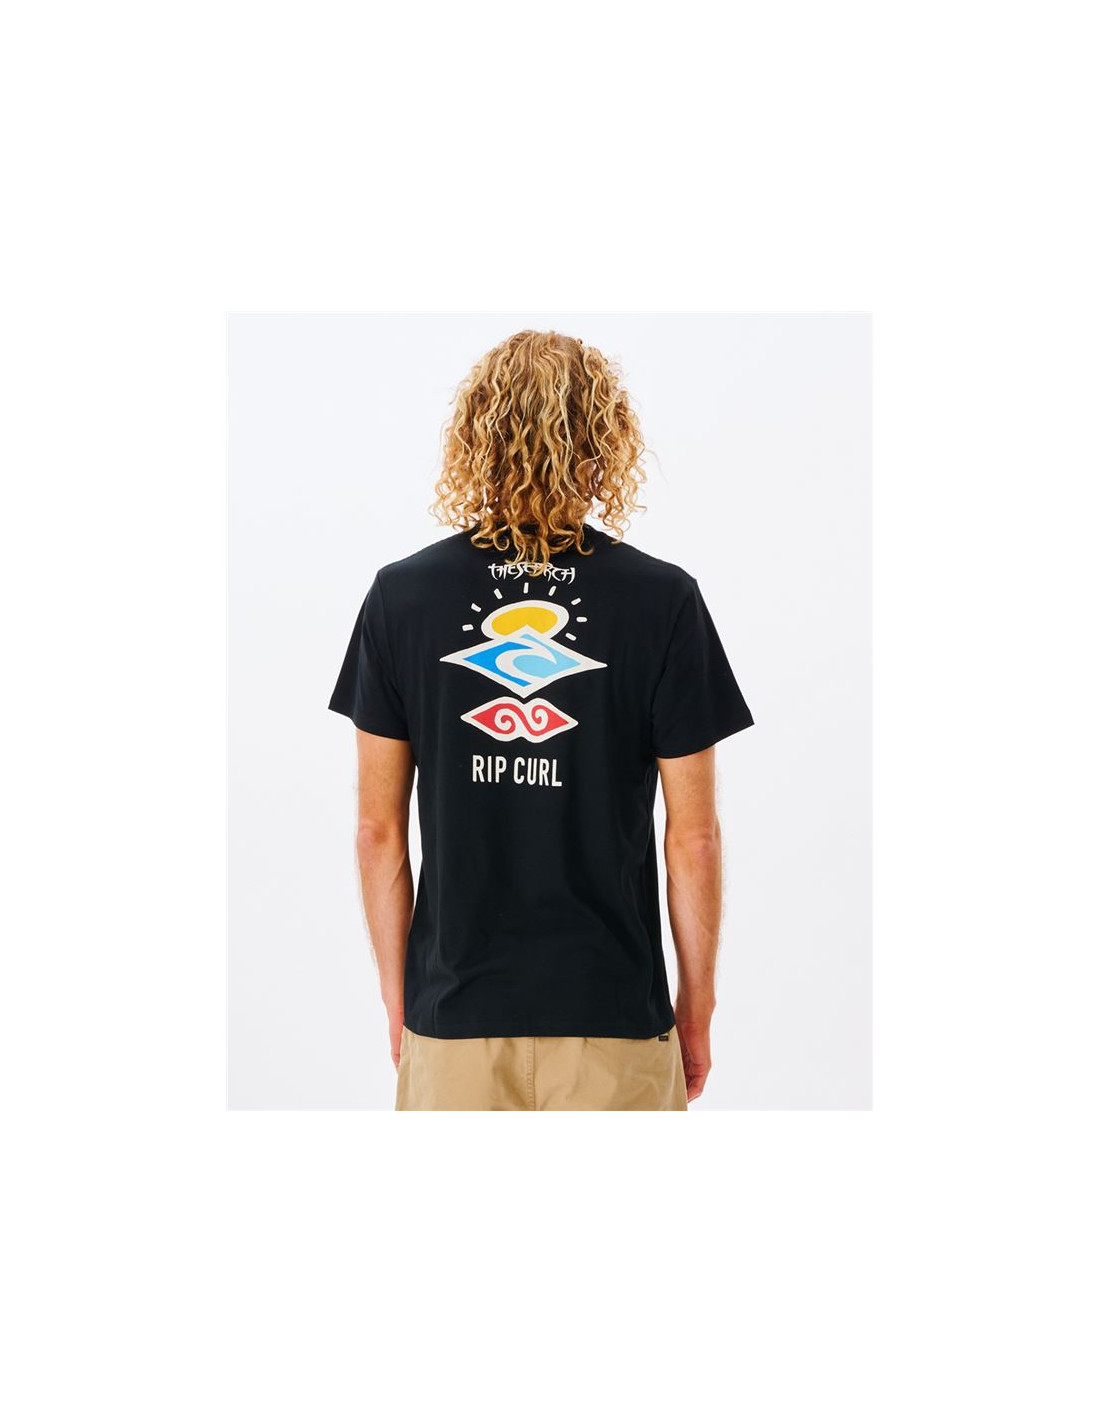 Camiseta Rip Curl Search Essential, Ecologica, Site Oficial